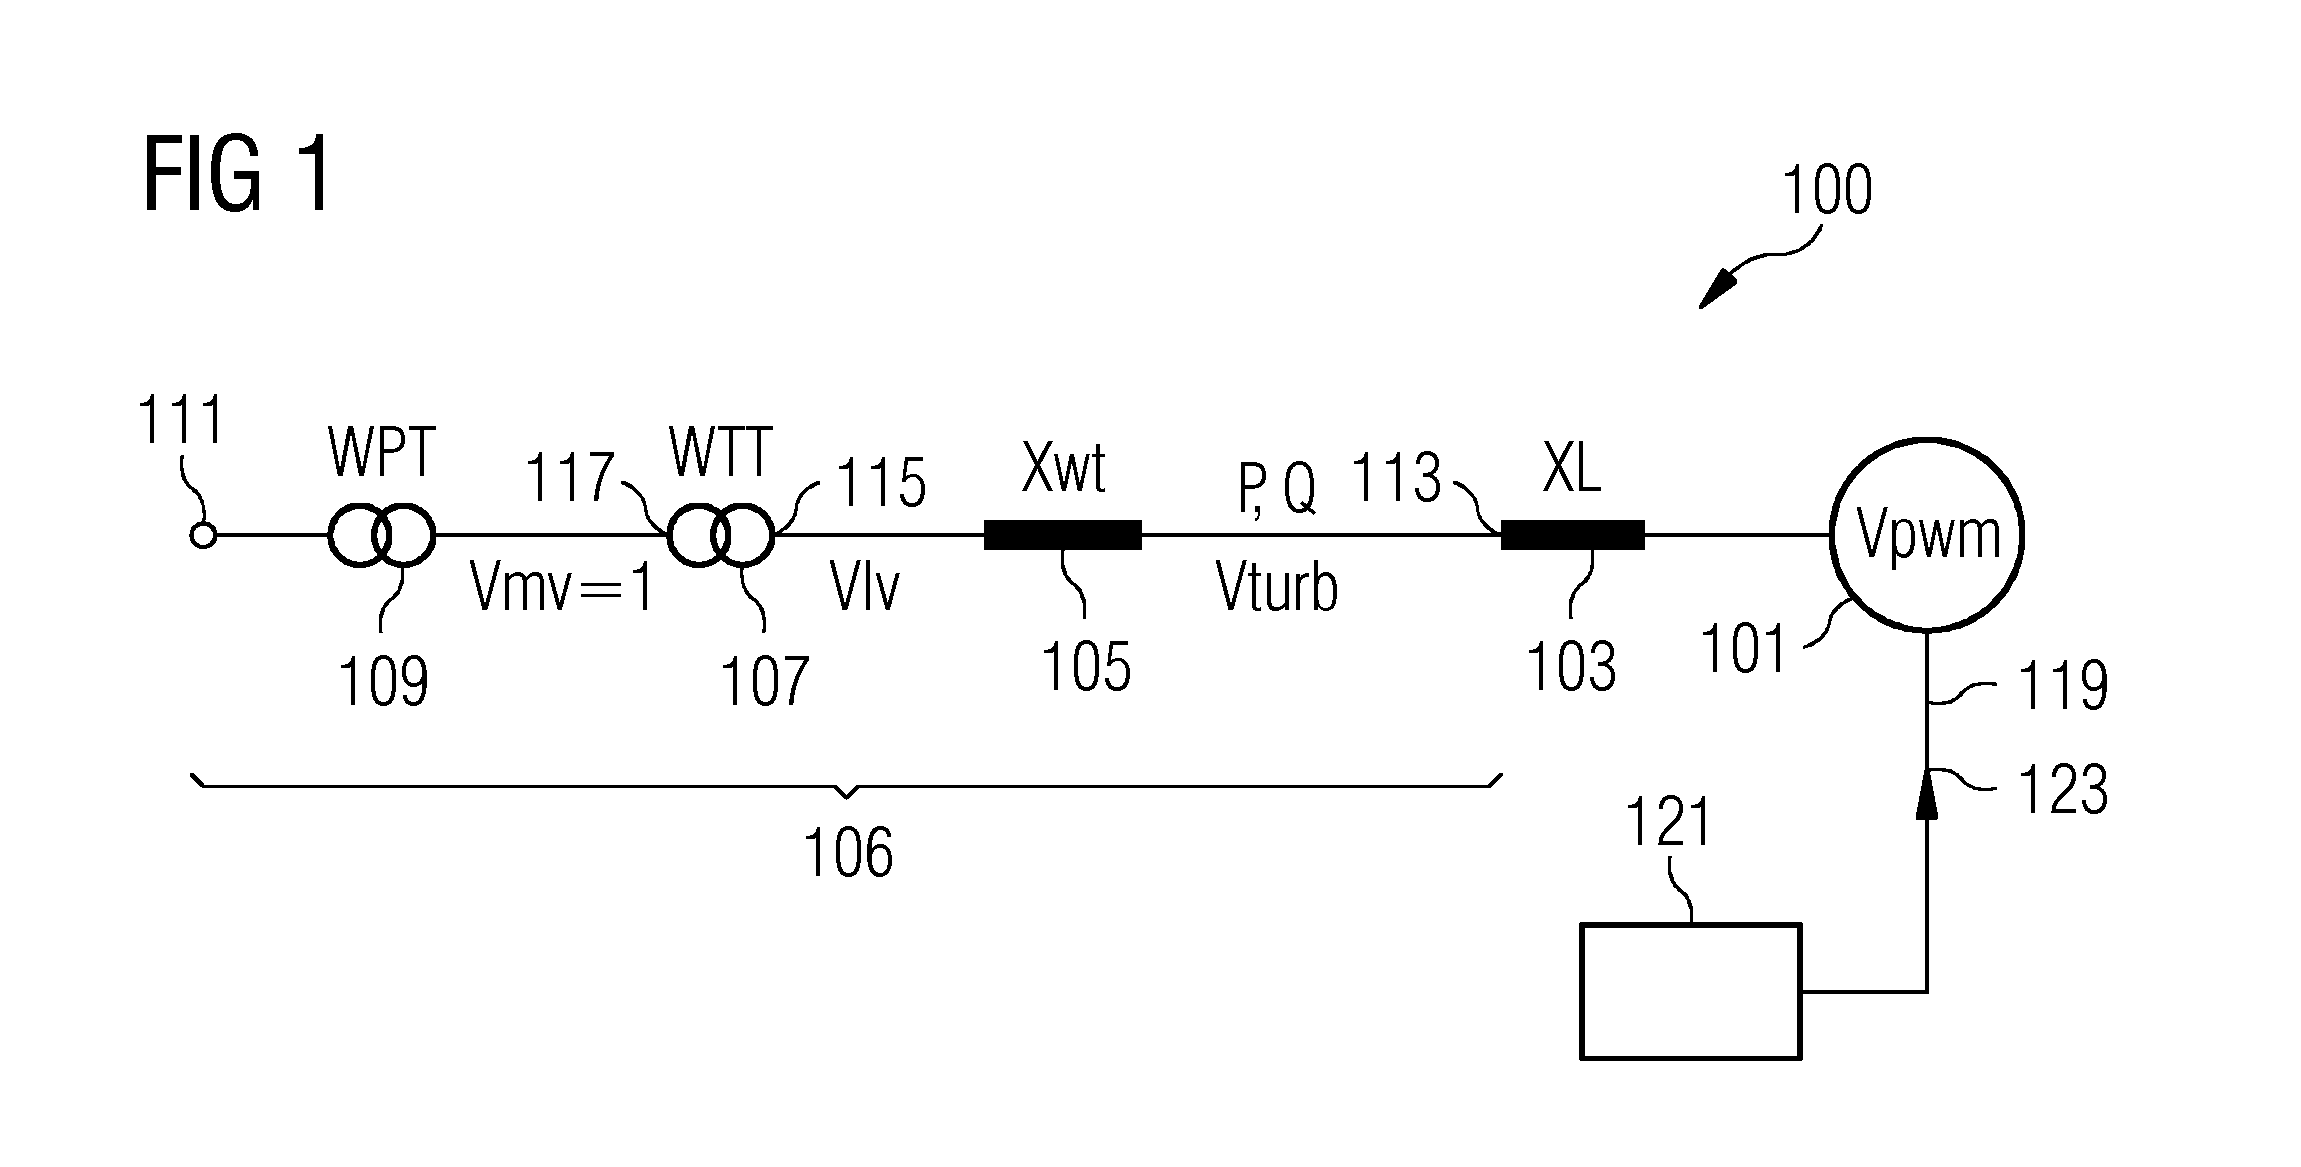 Method for determining a voltage bounding range